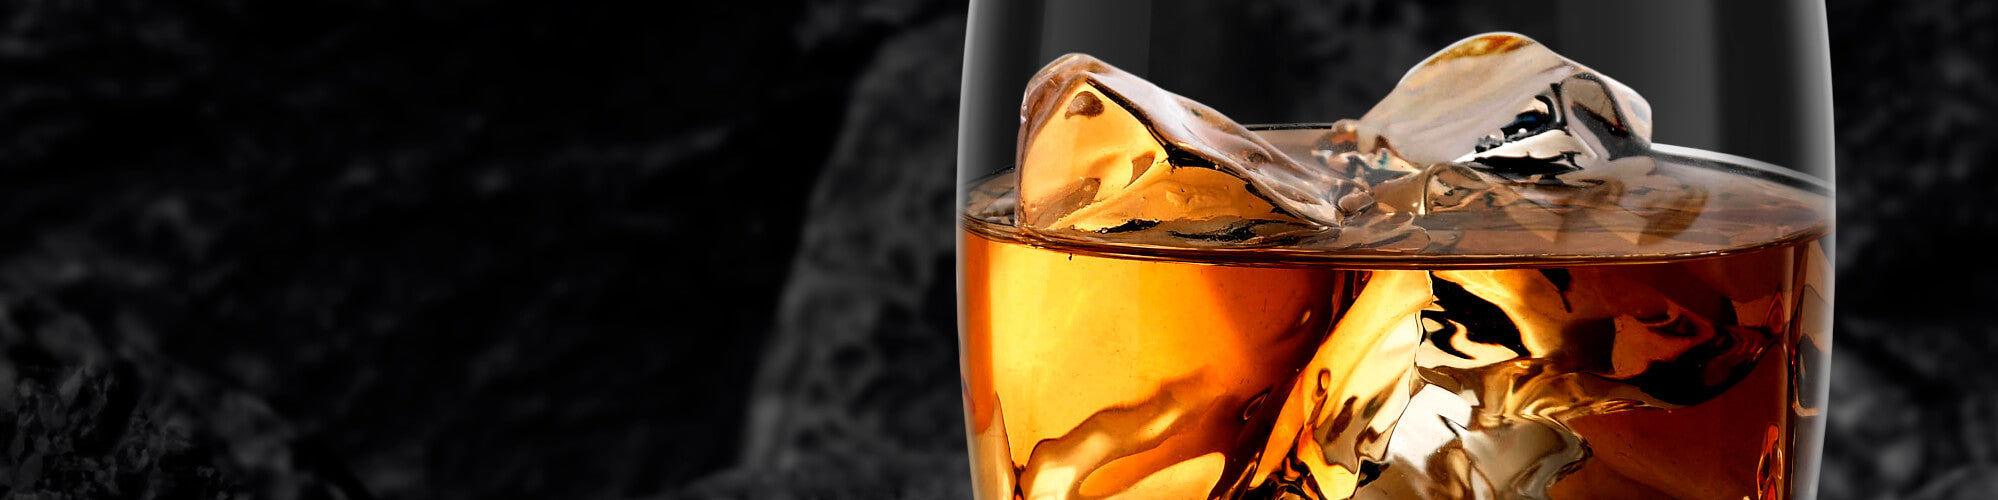 Single Cask Scotch Whisky Available Online